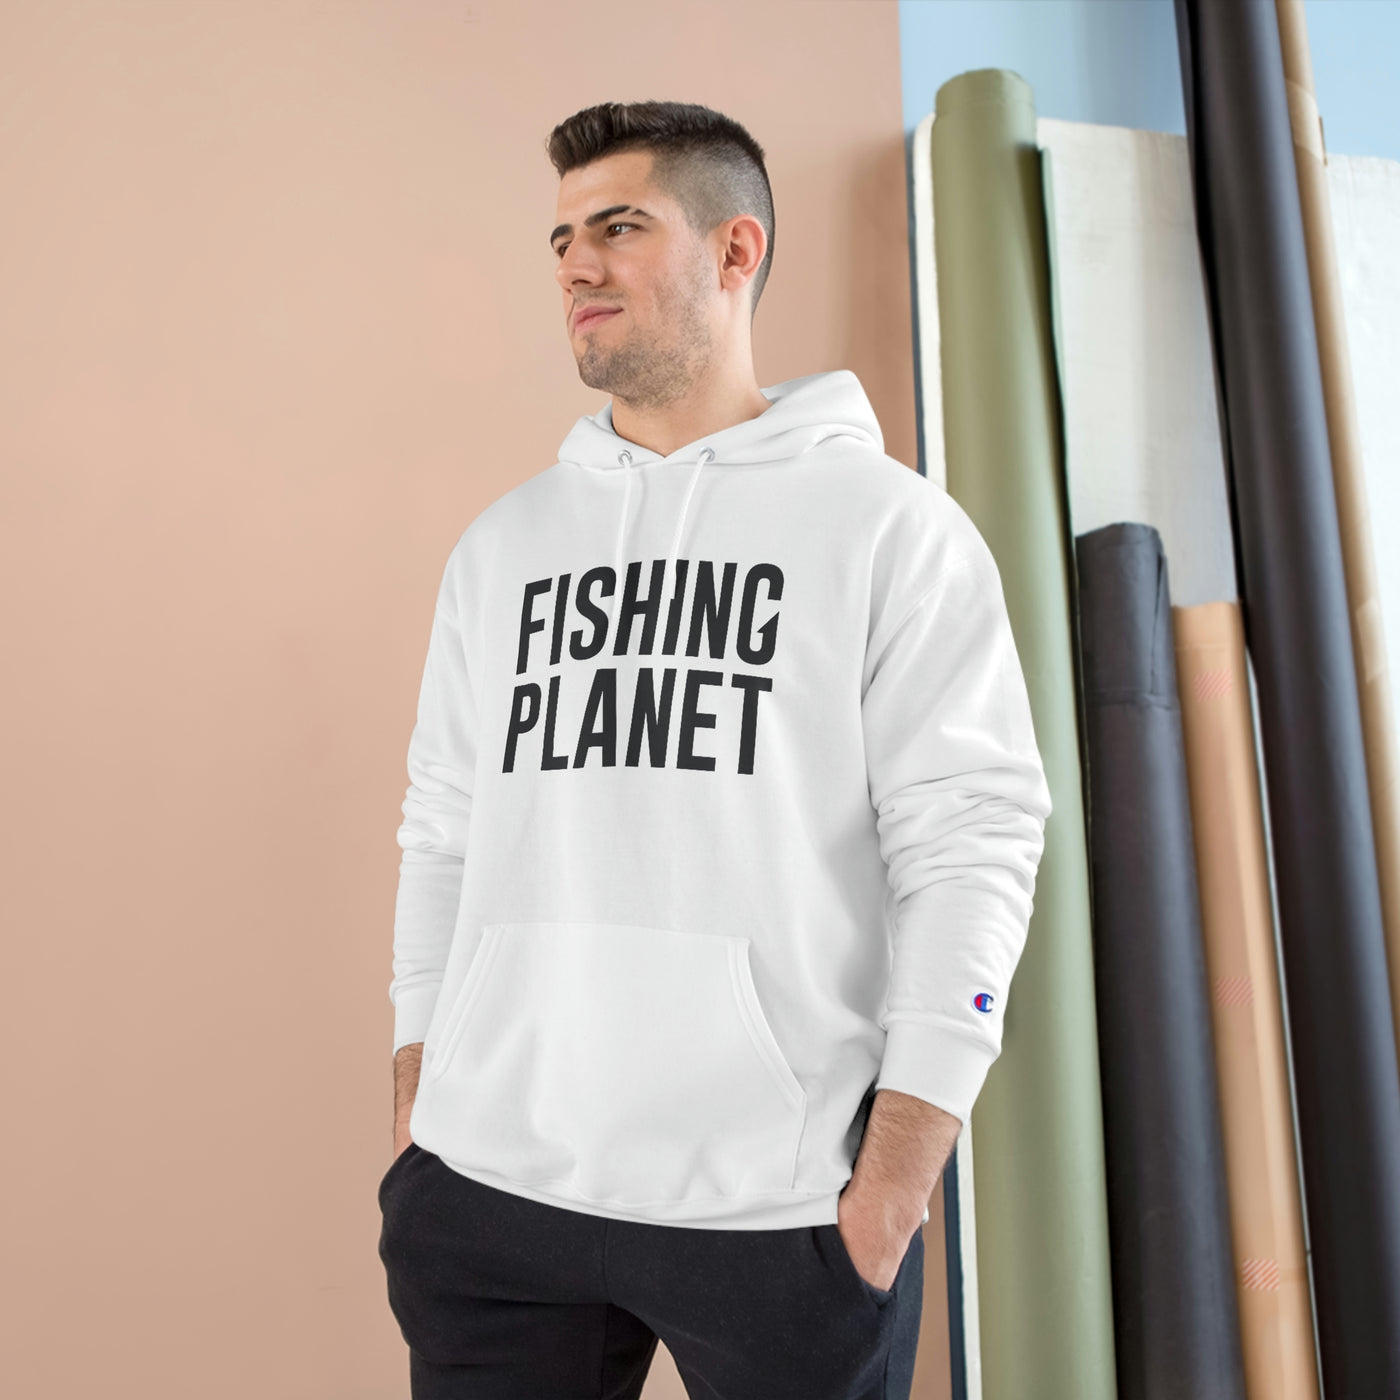 Fishing Planet Logo Champion Hoodie (US shipping)